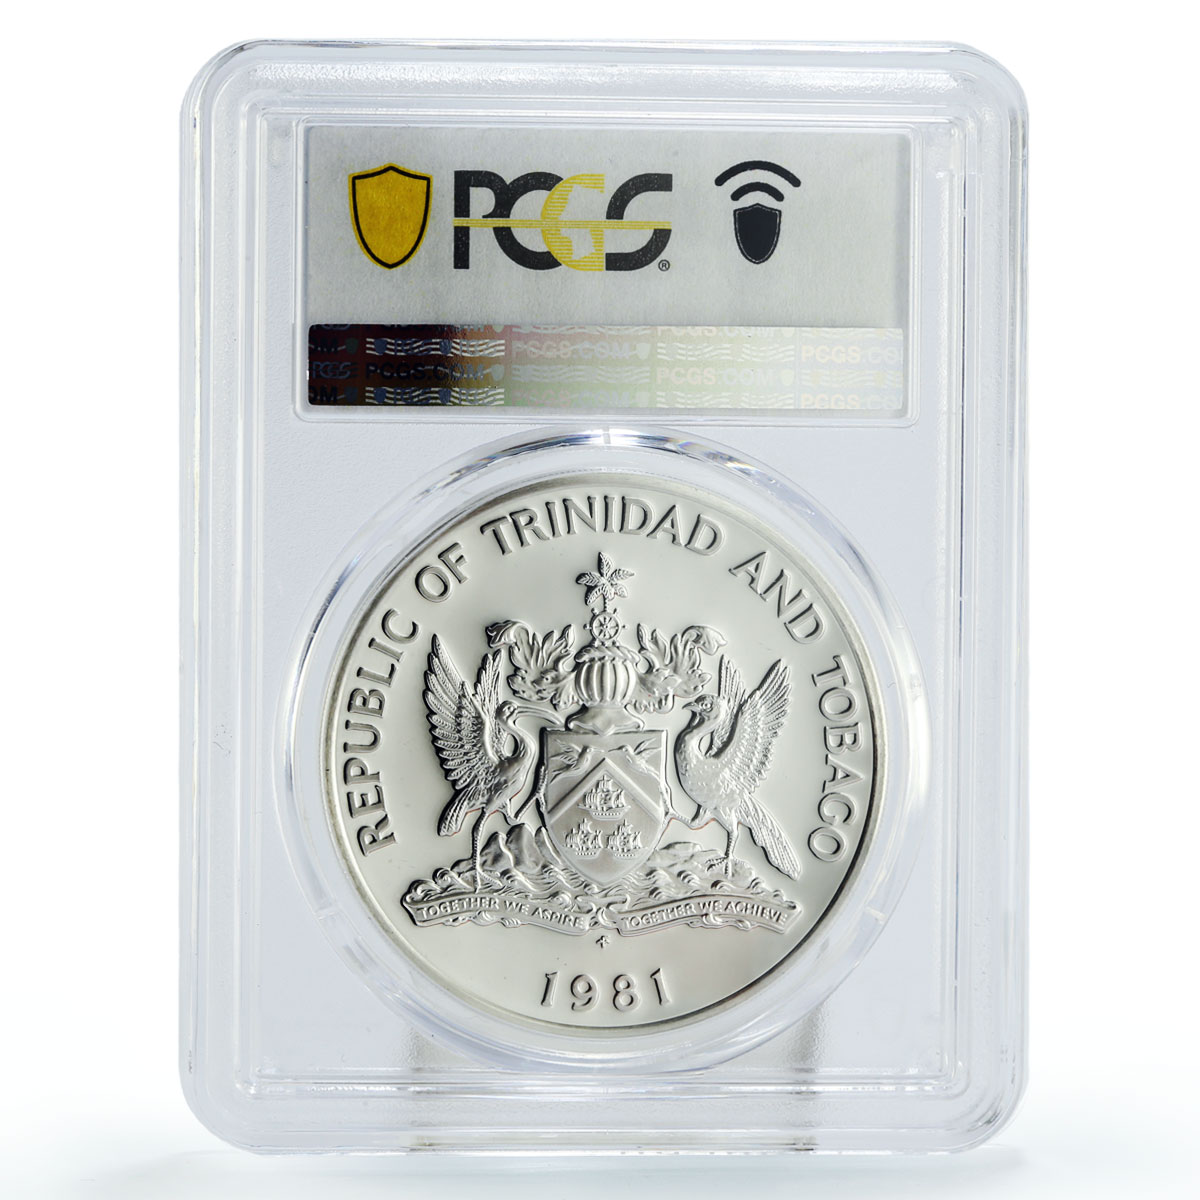 Trinidad and Tobago 10 $ Republic Independence Ship PR69 PCGS silver coin 1981